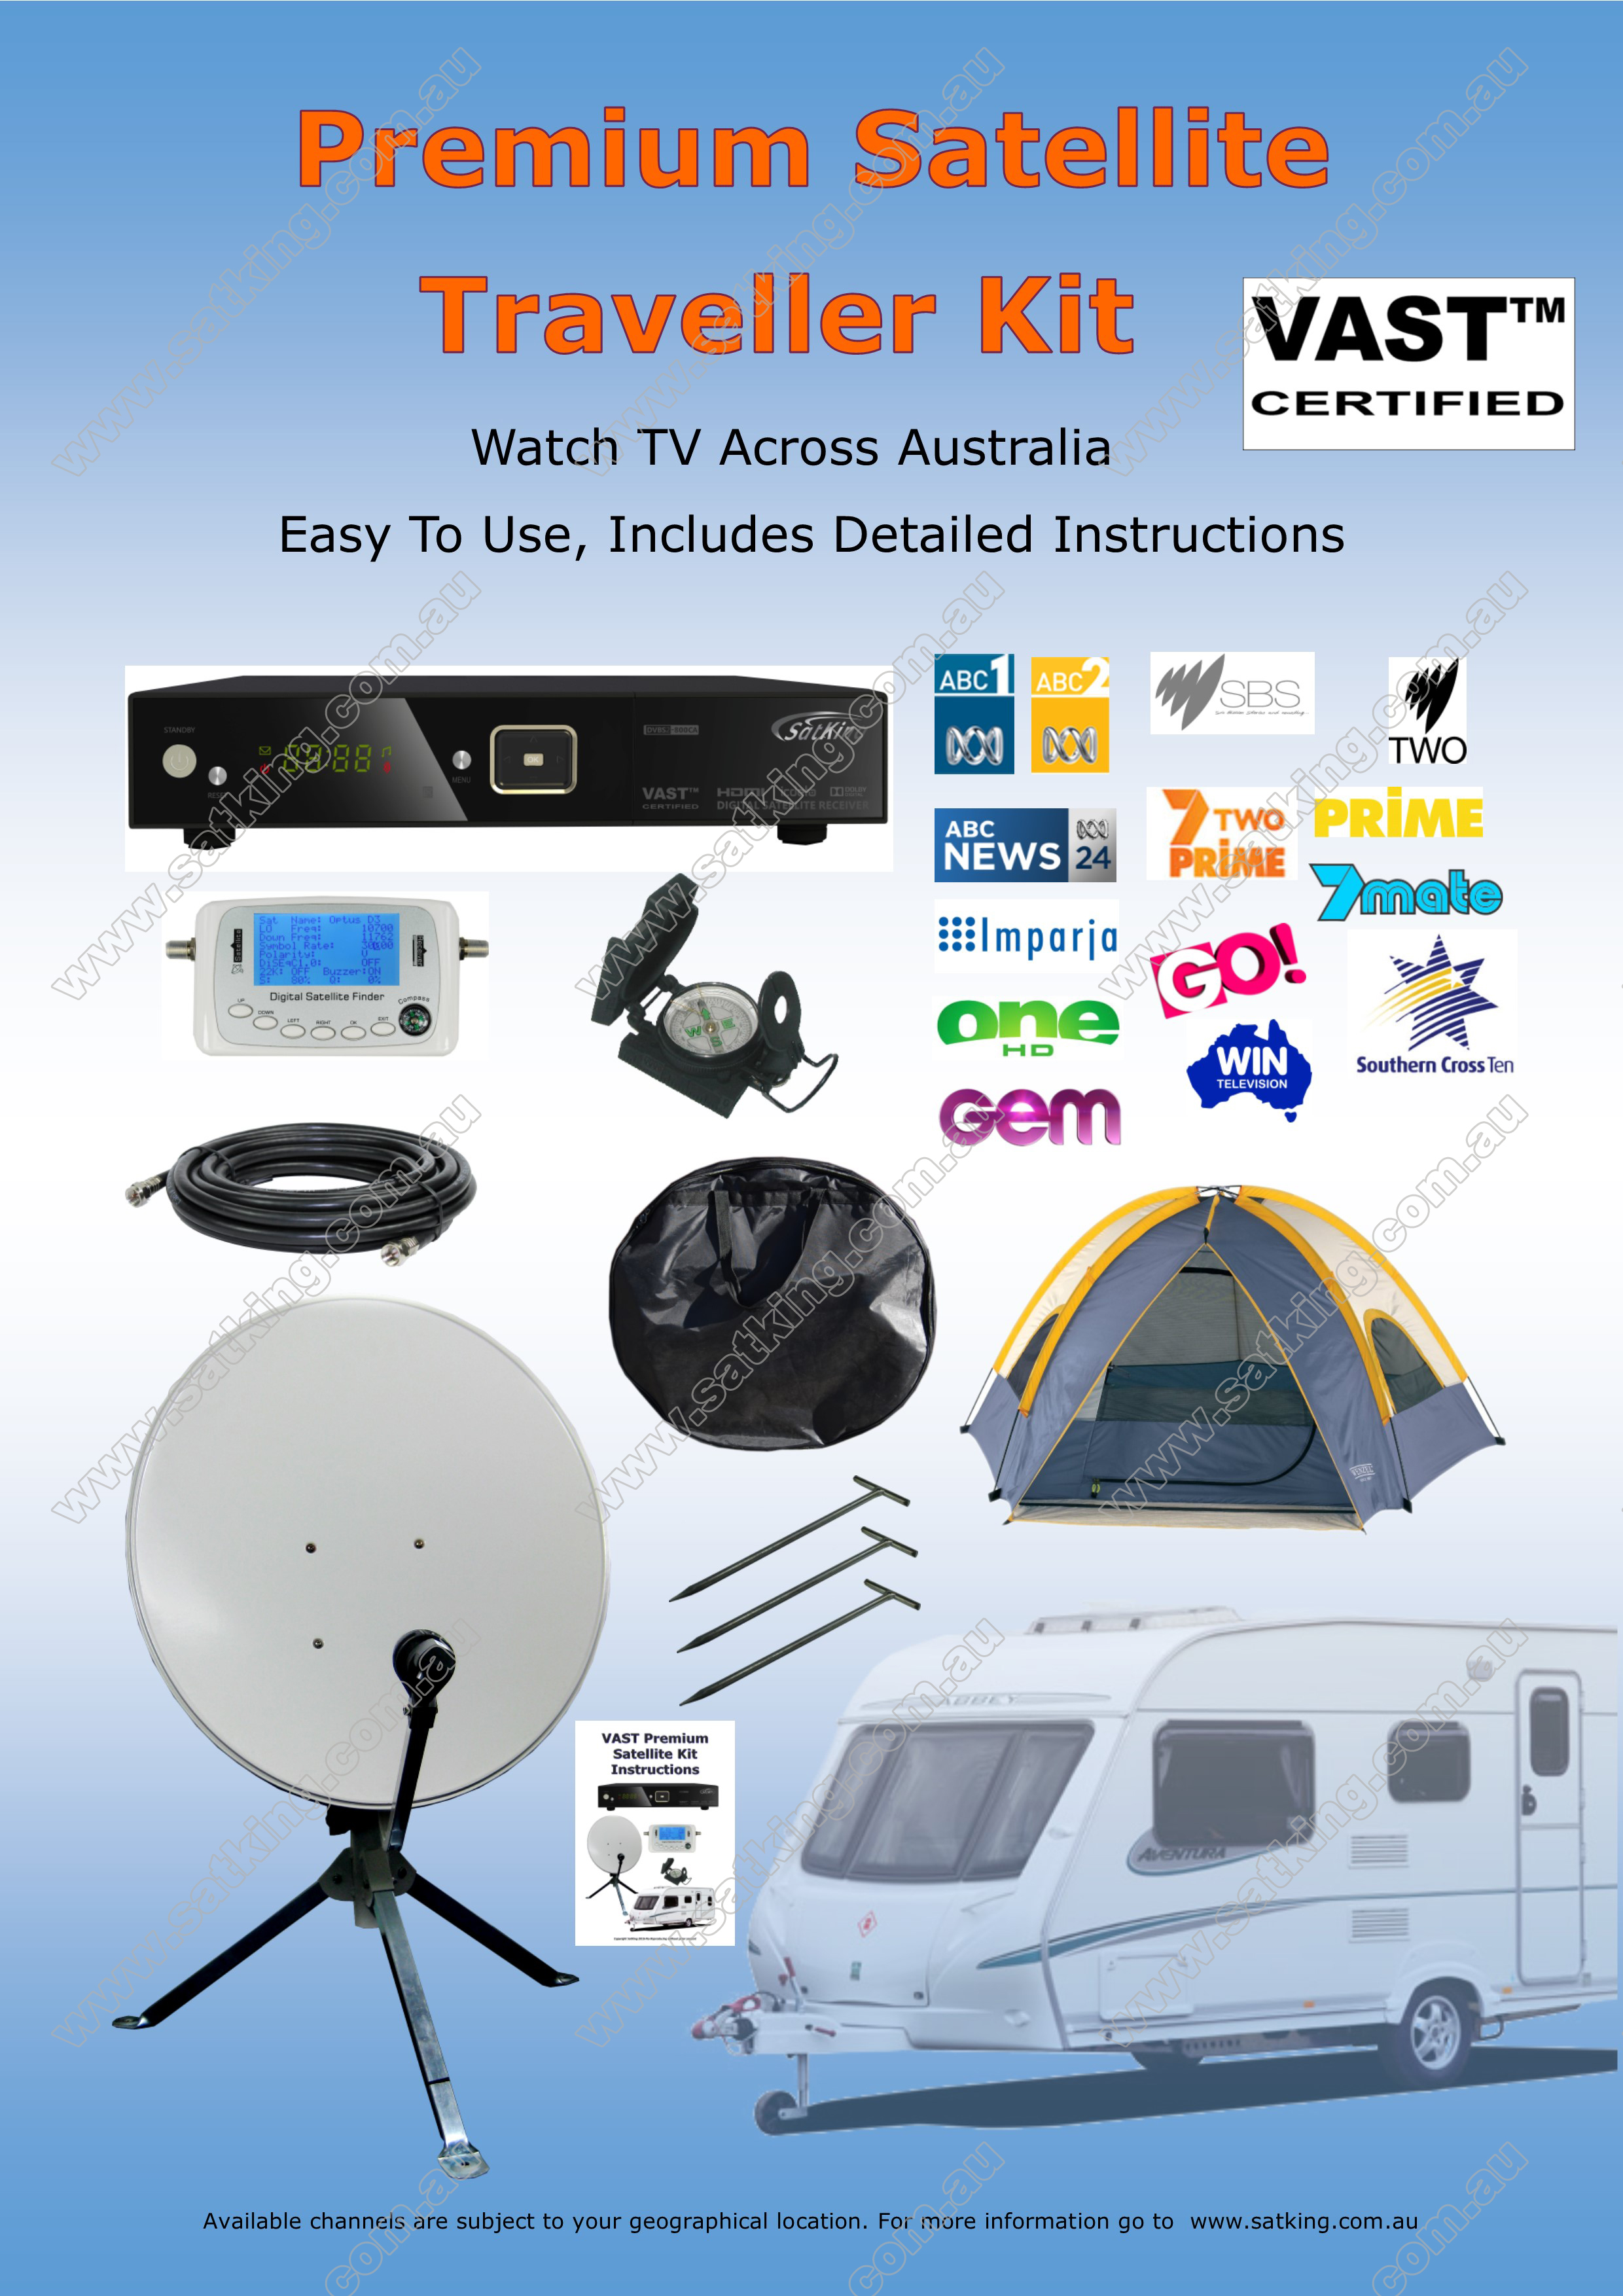 Vast Satellite TV Premium Traveller Kit